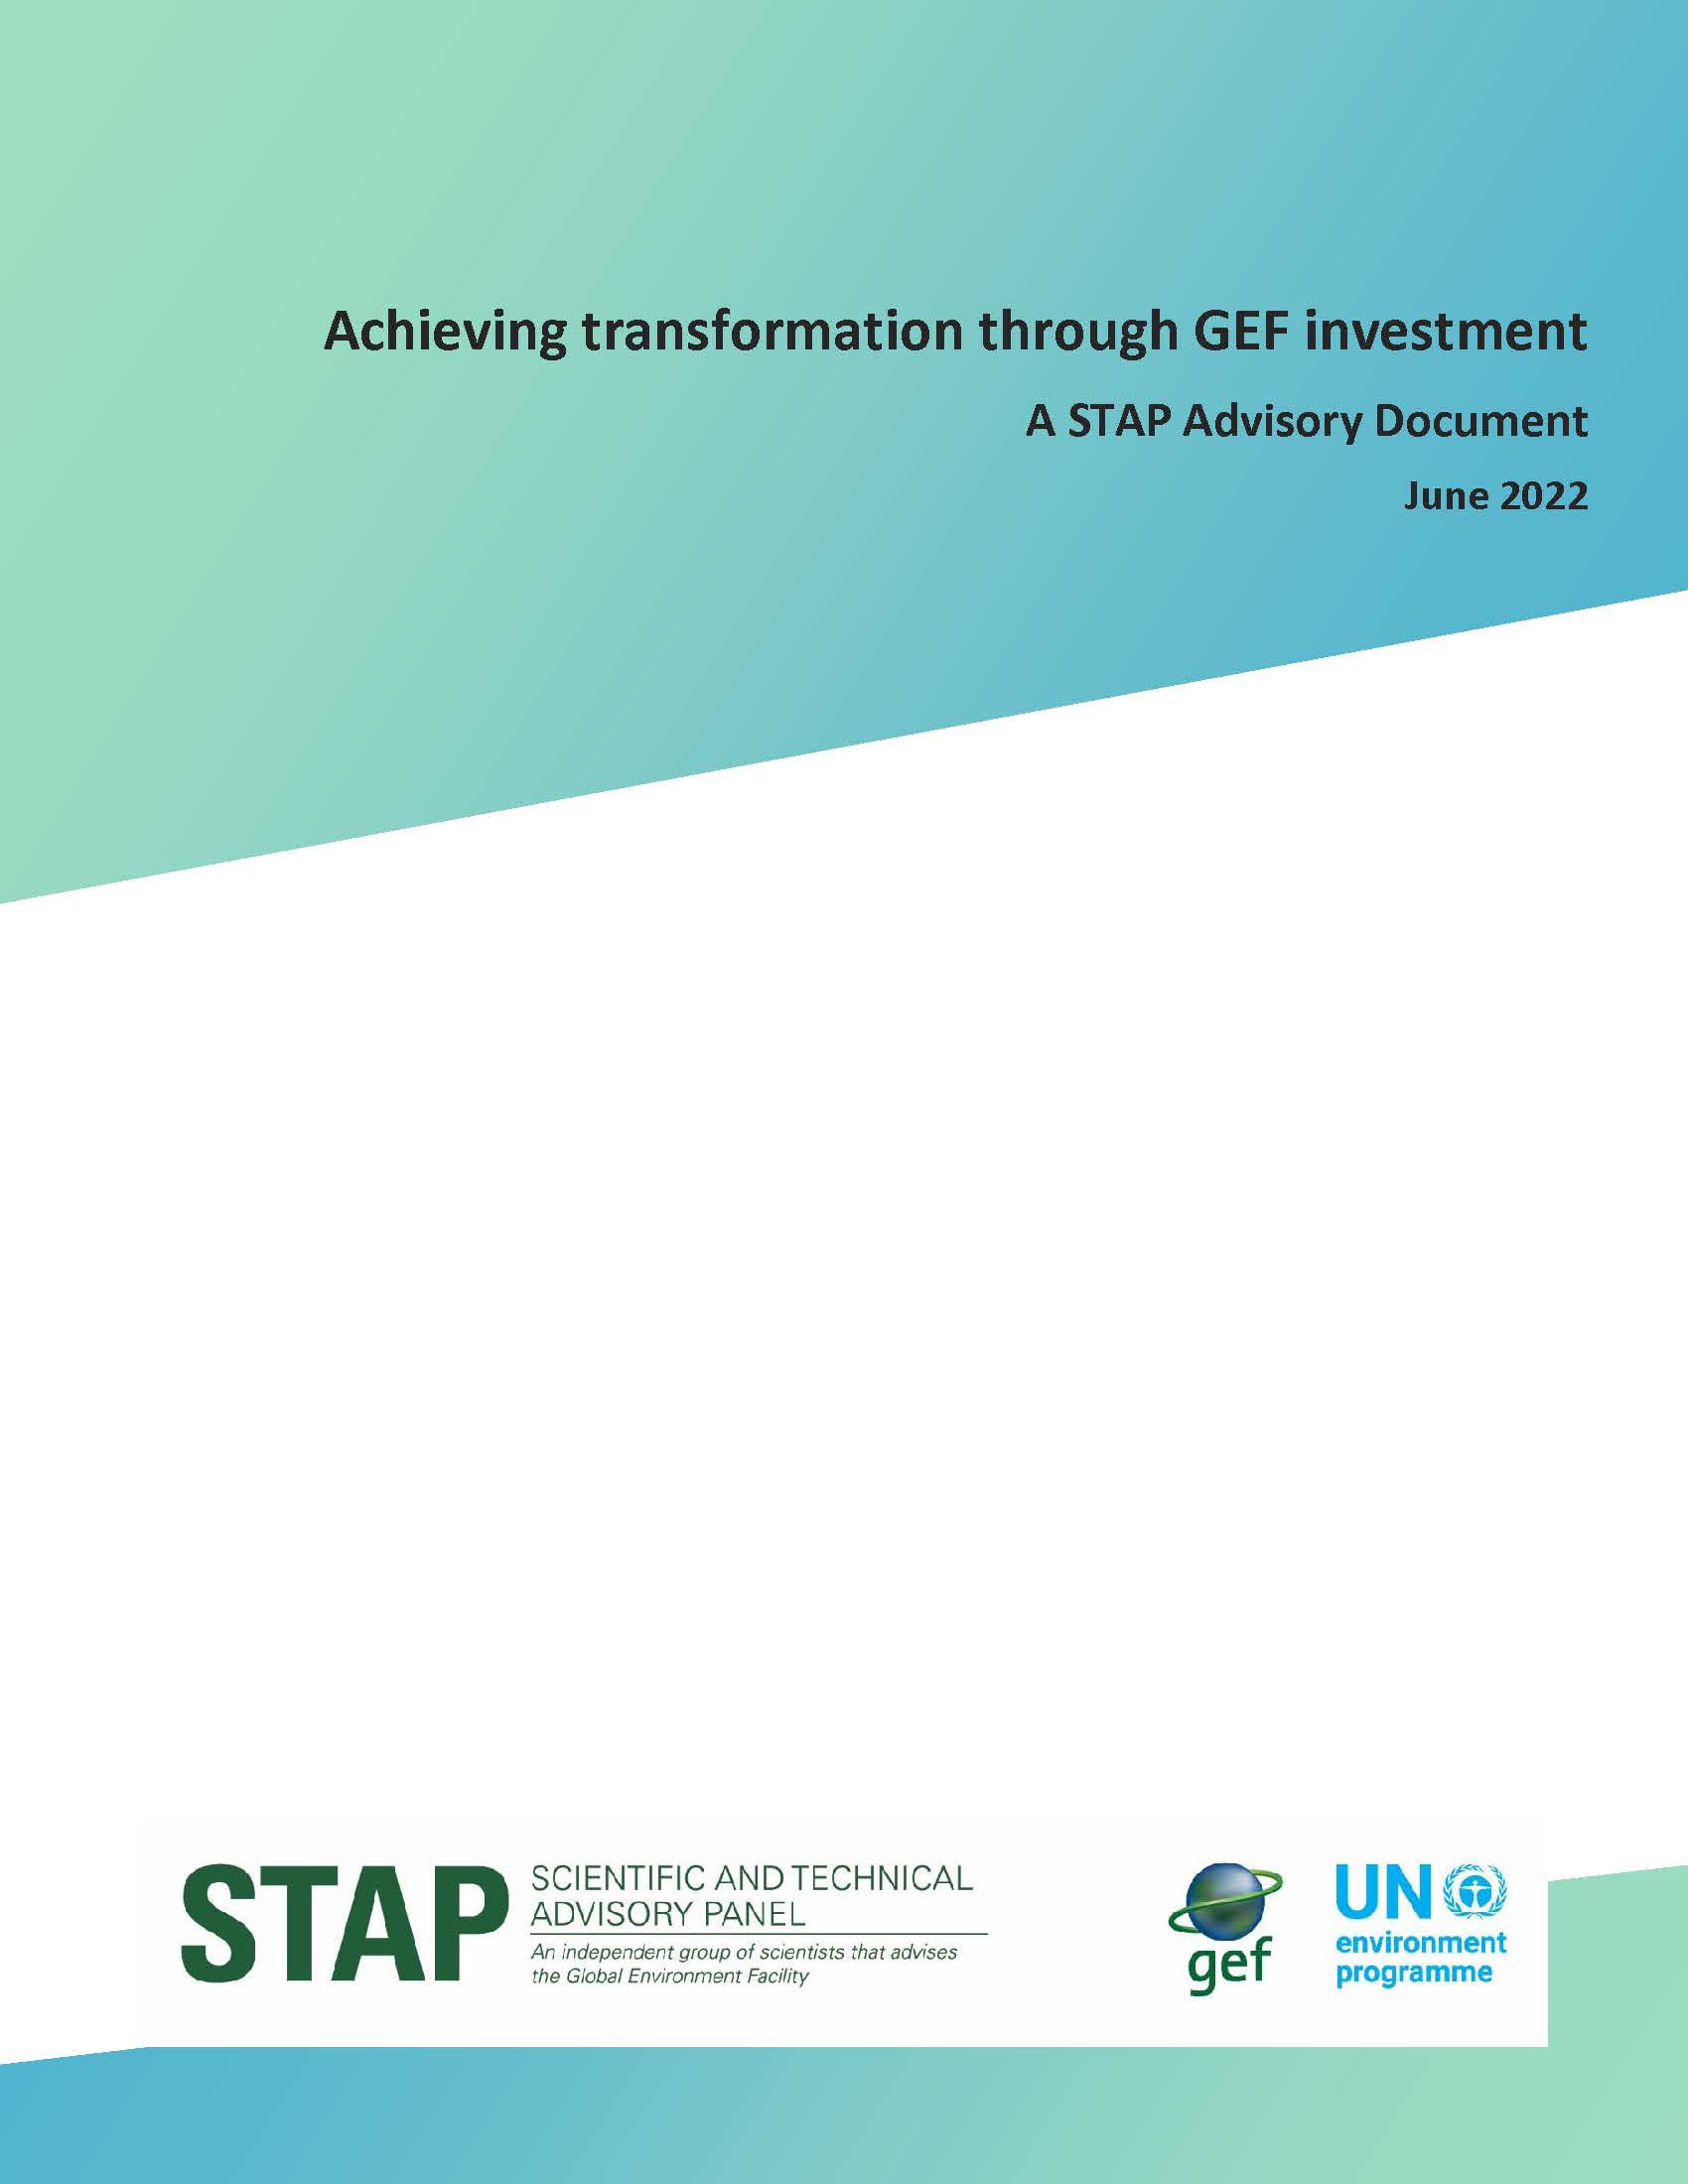 Achieving transformation through GEF investments